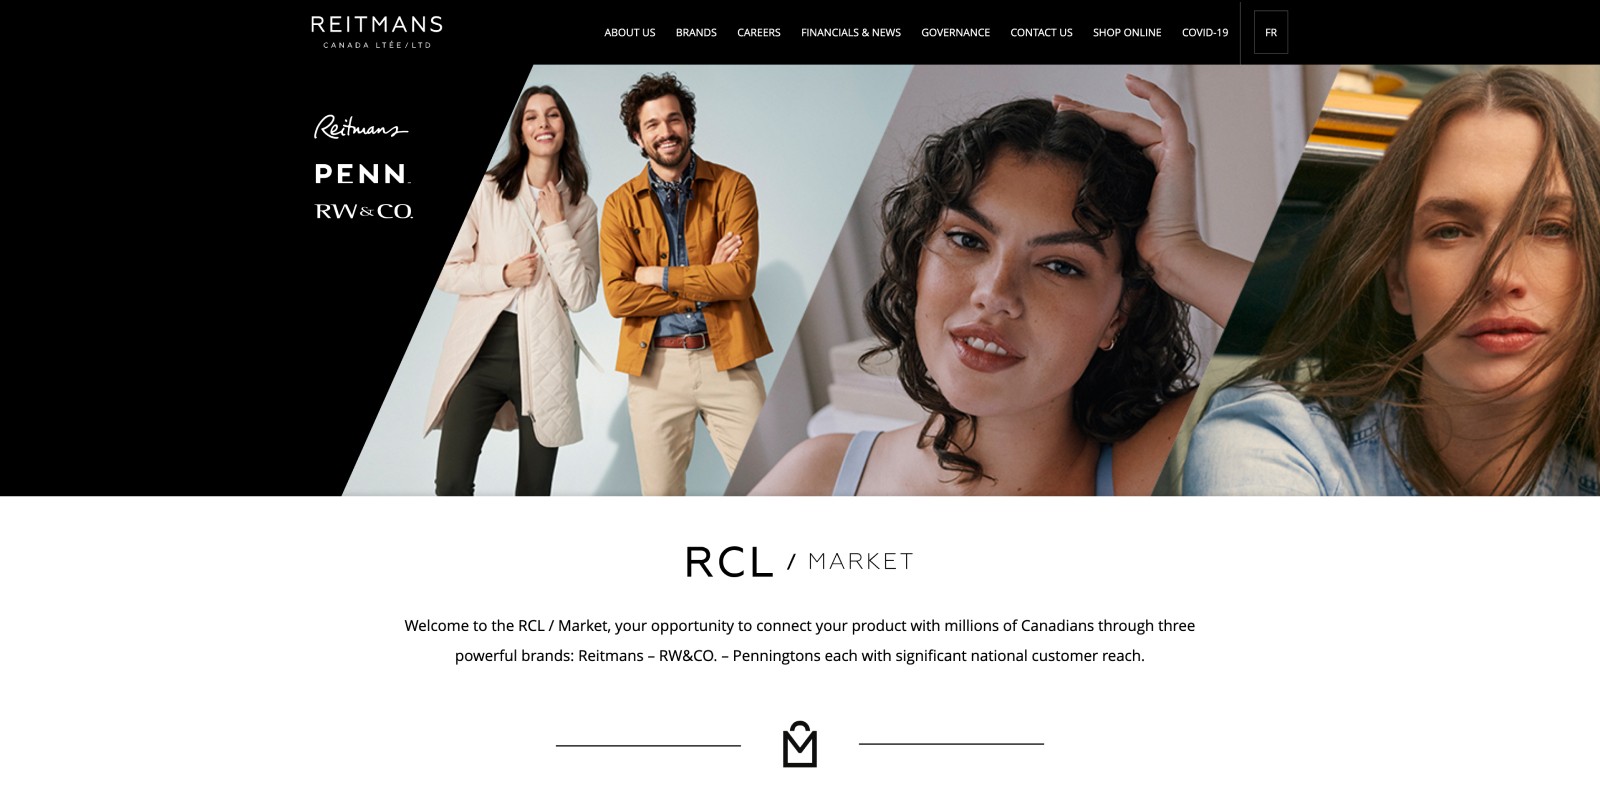 The RCL Market webpage.